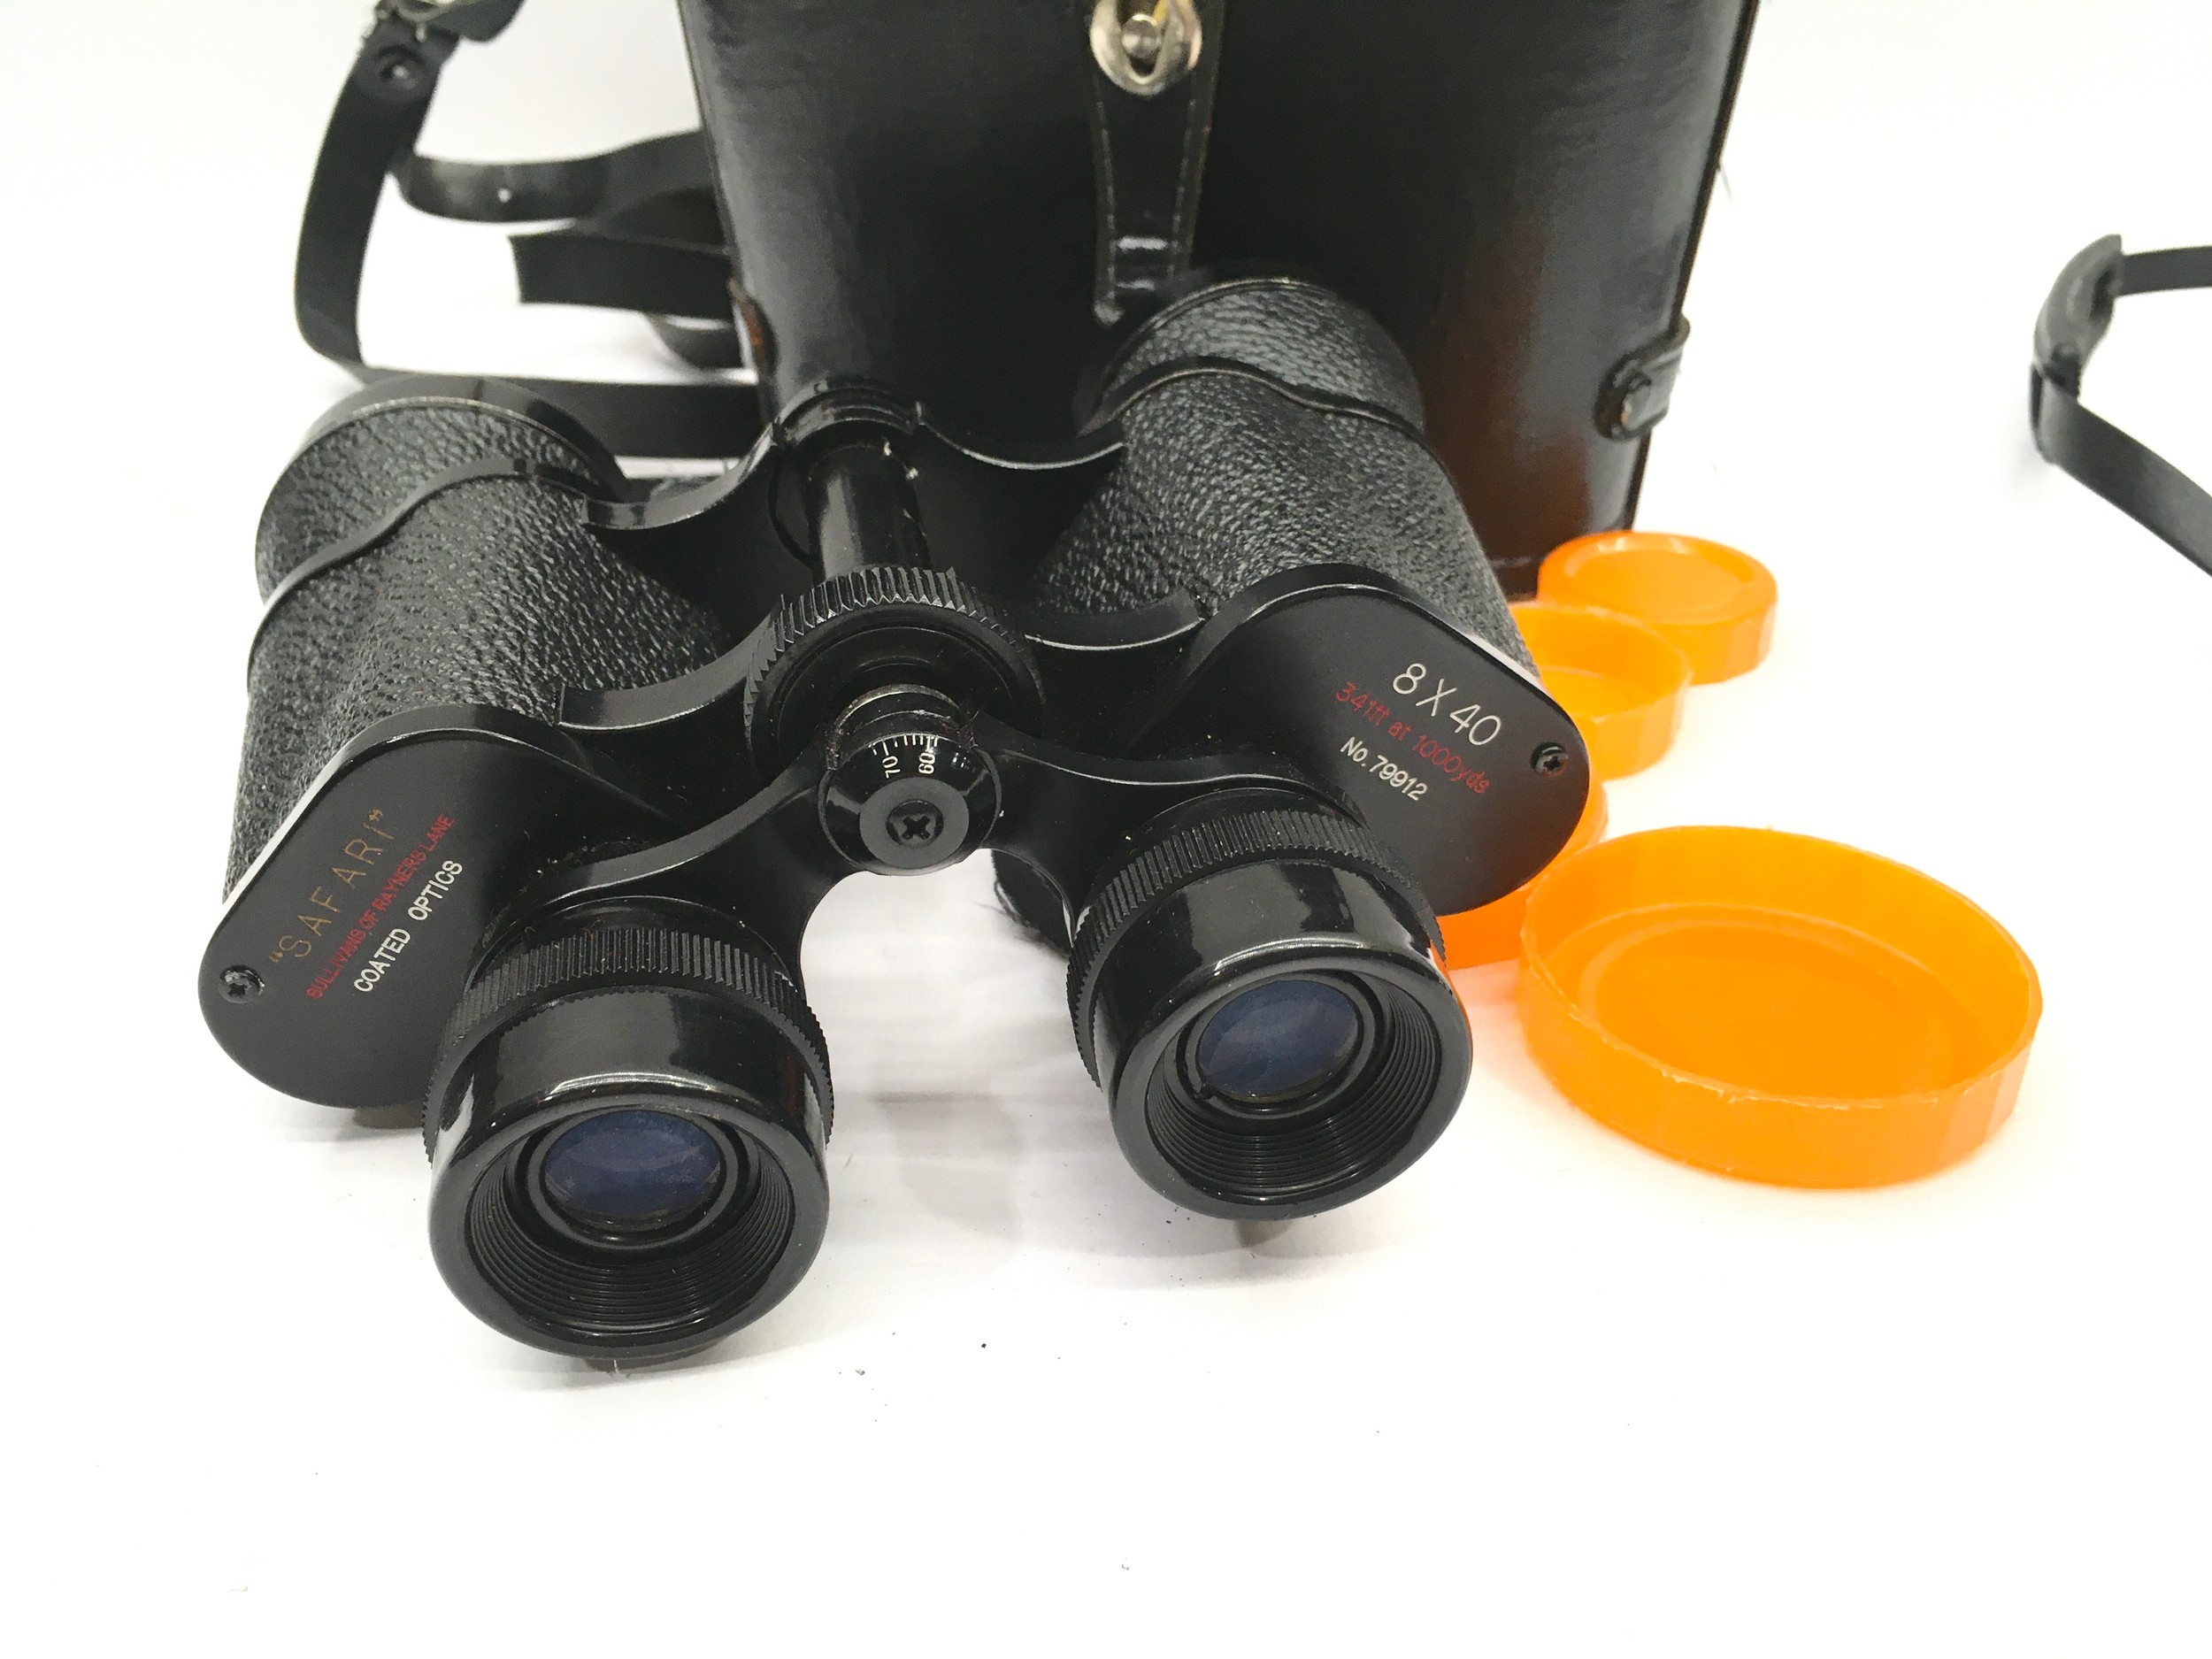 Minolta XG2 35mm SLR camera with fitted Rokkor 45mm lens c/w a pair of Sullivans Safari binoculars - Bild 4 aus 4